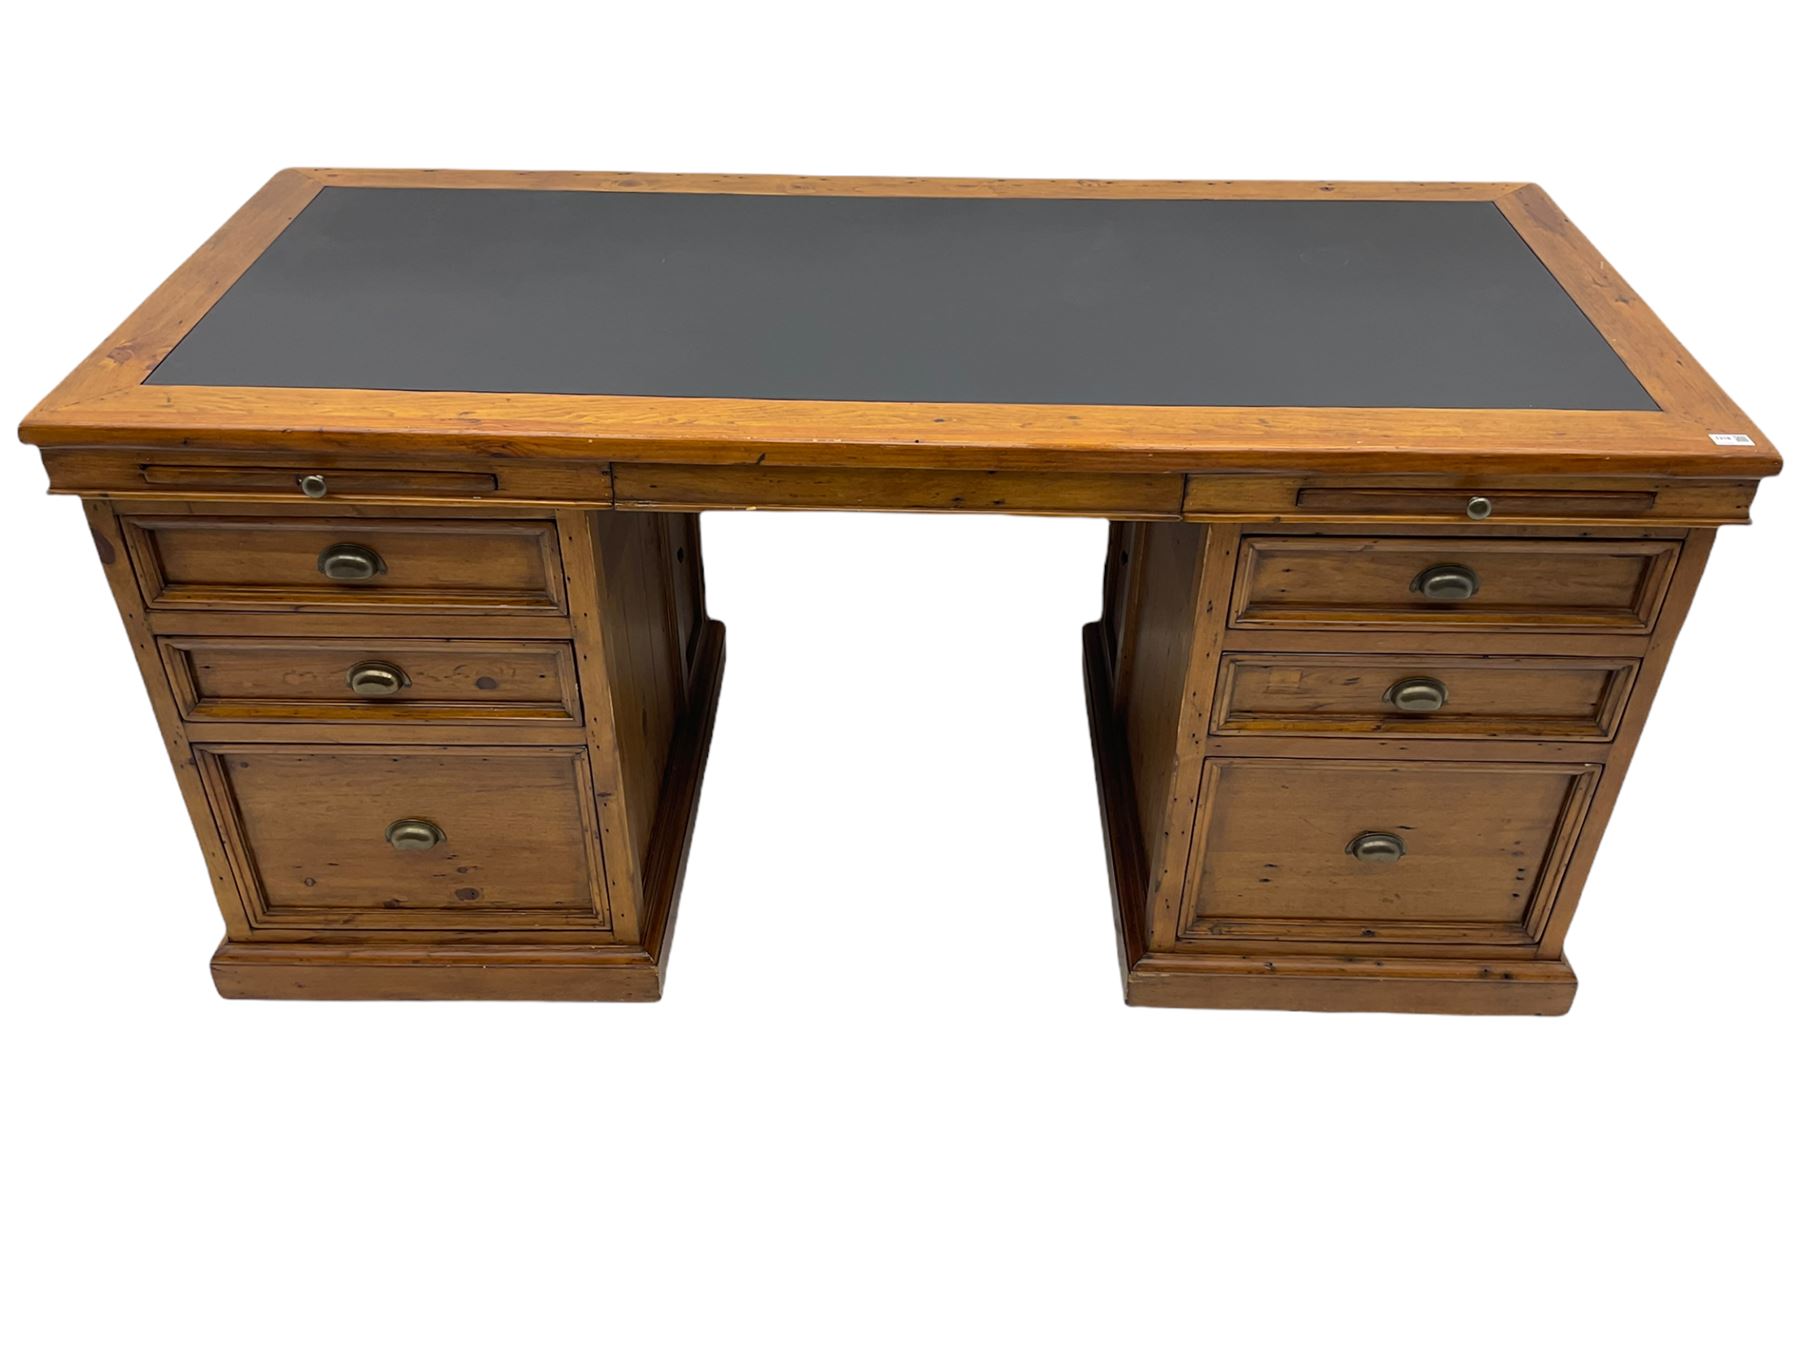 Barker & Stonehouse - Villiers reclaimed eastern pine twin pedestal desk - Image 2 of 8